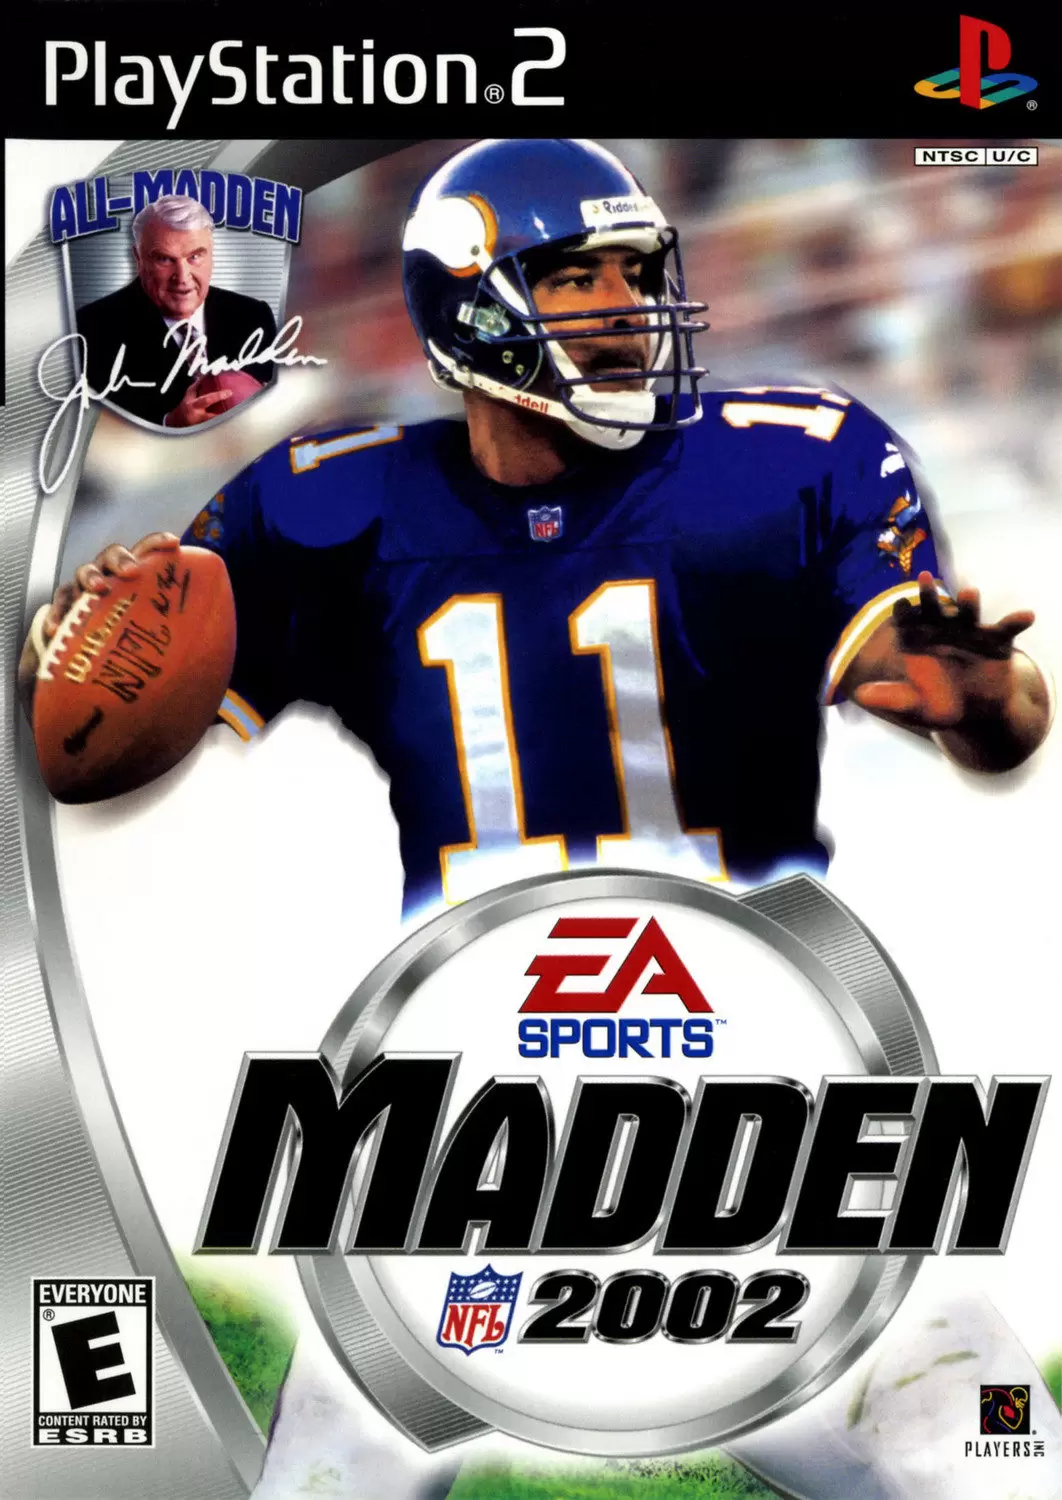 PS2 Games - Madden NFL 2002